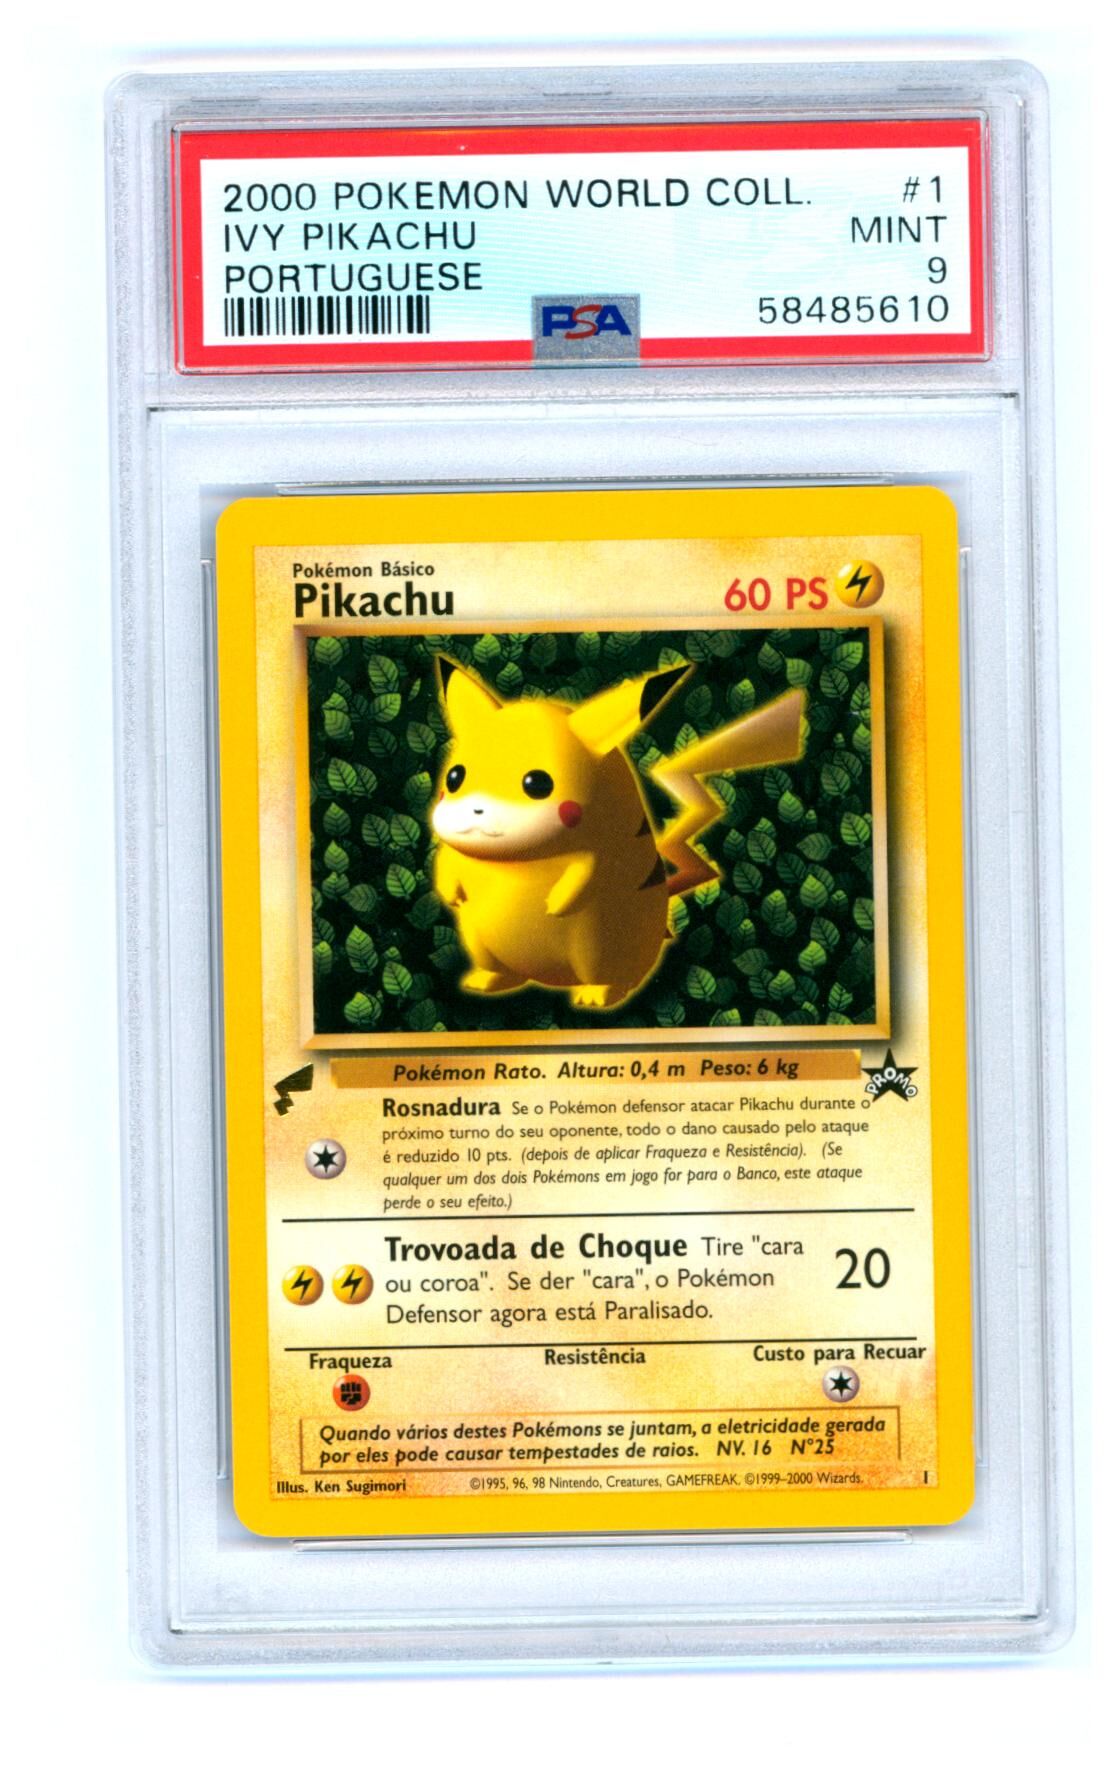 Pikachu #1 - Portuguese 2000 World Collection - PSA 9 MINT - Pokémon